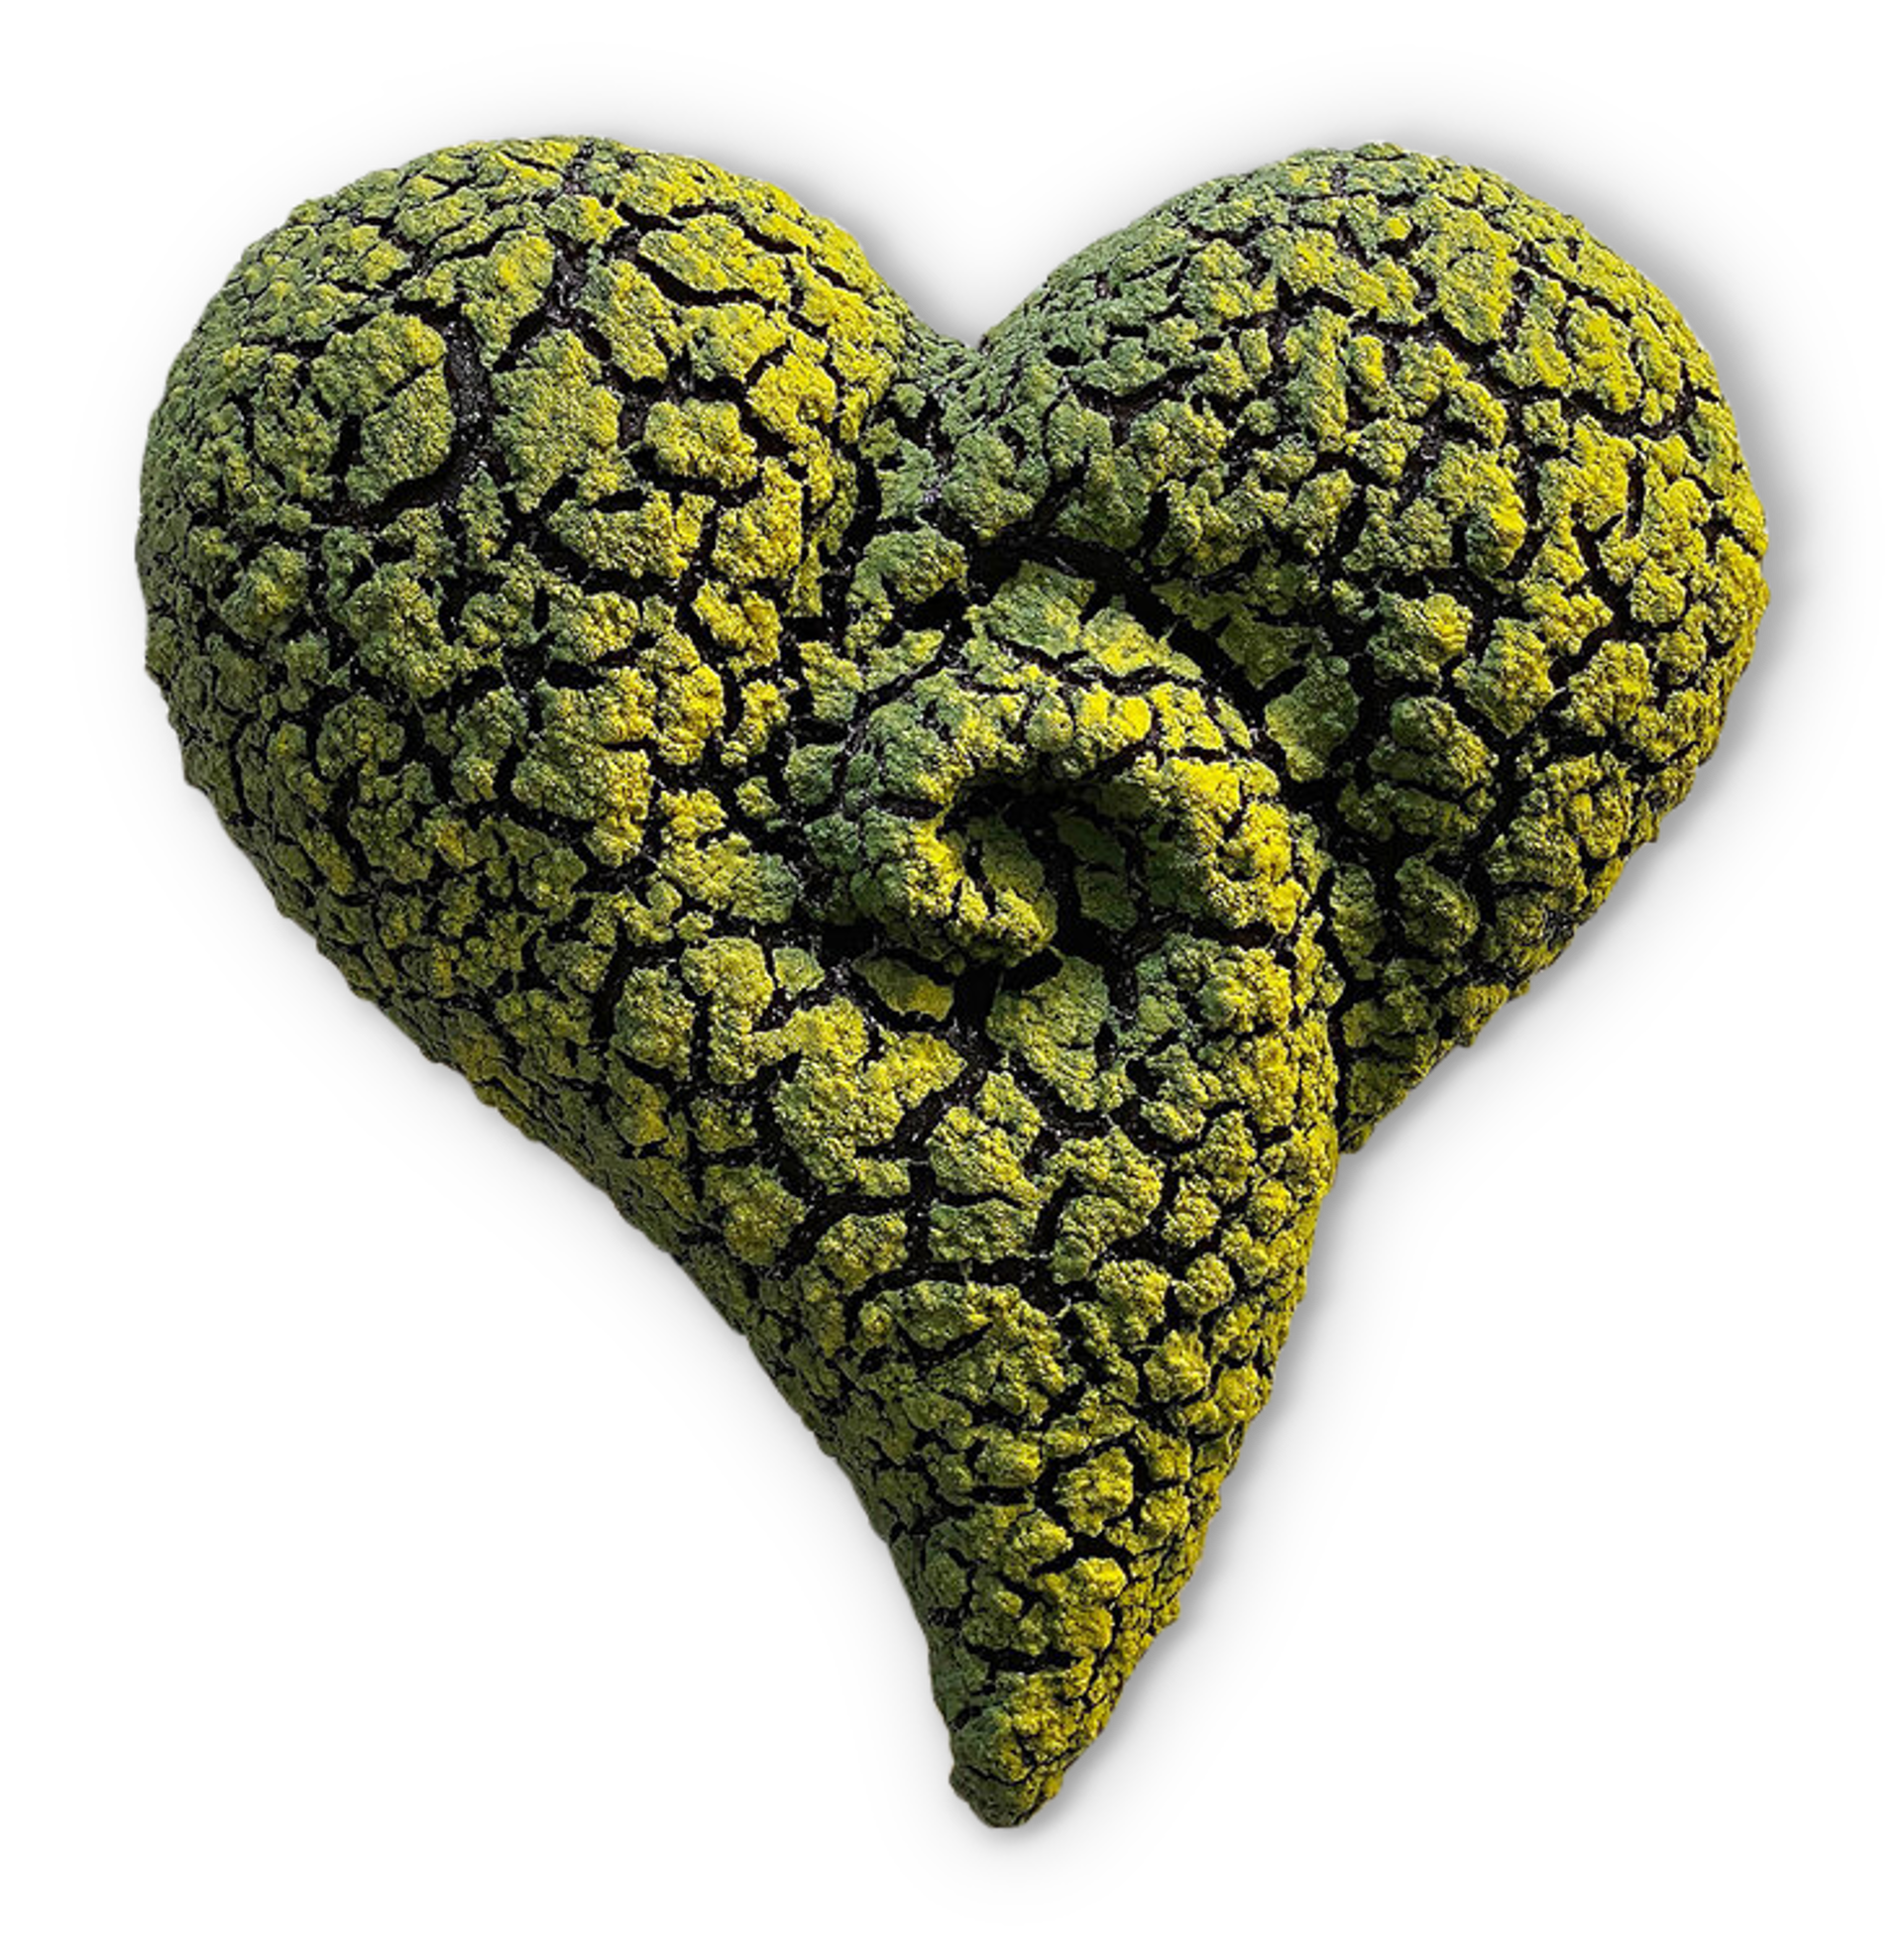 Yellow and Green Swirled Lichen Heart by Randy O'Brien